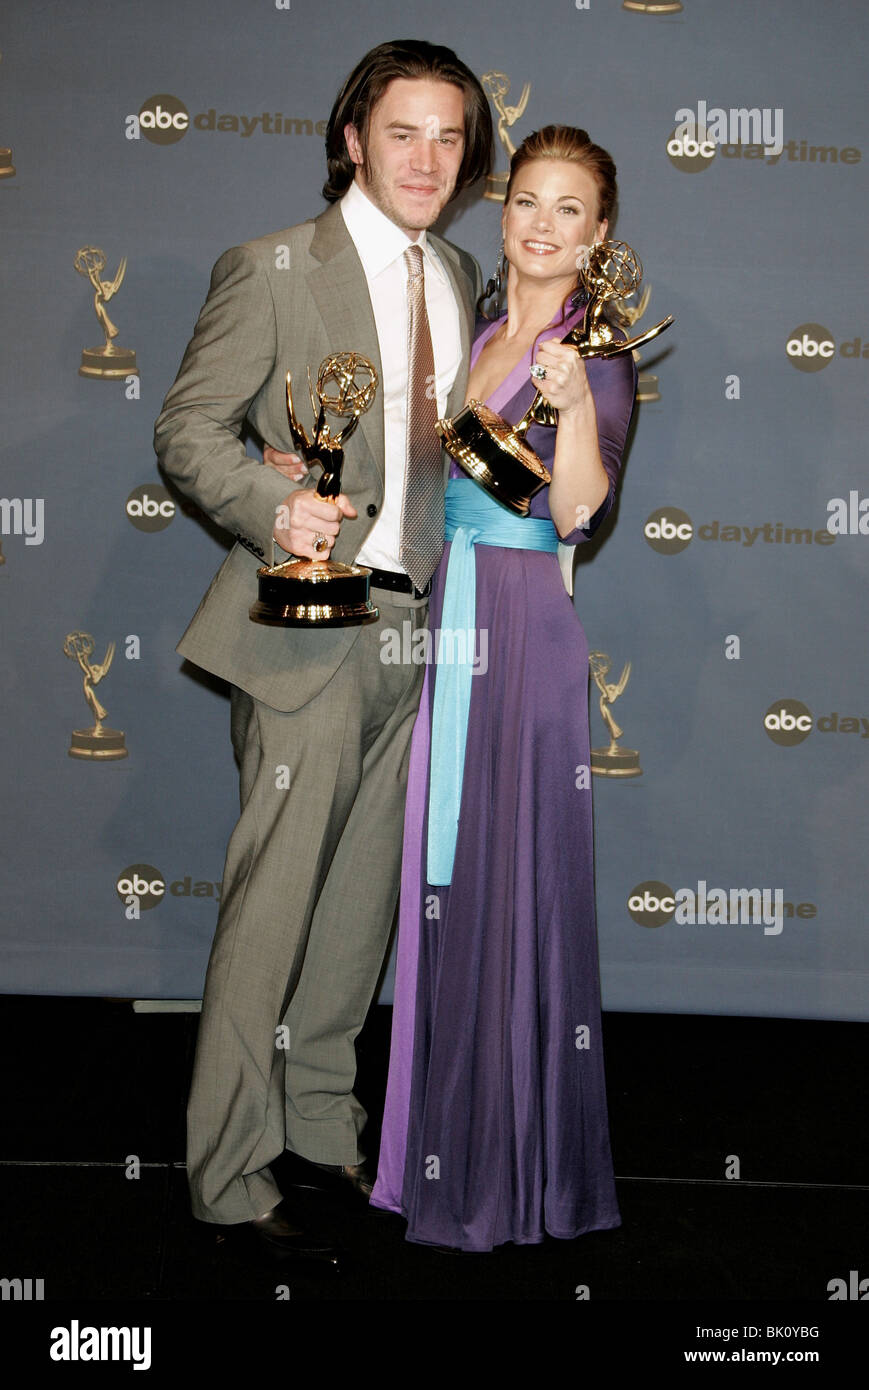 TOM PELPHREY & GINA TOGNONI 33RD GIORNO Emmy Awards Kodak Theatre Hollywood LOS ANGELES STATI UNITI D'AMERICA 28 Aprile 2006 Foto Stock